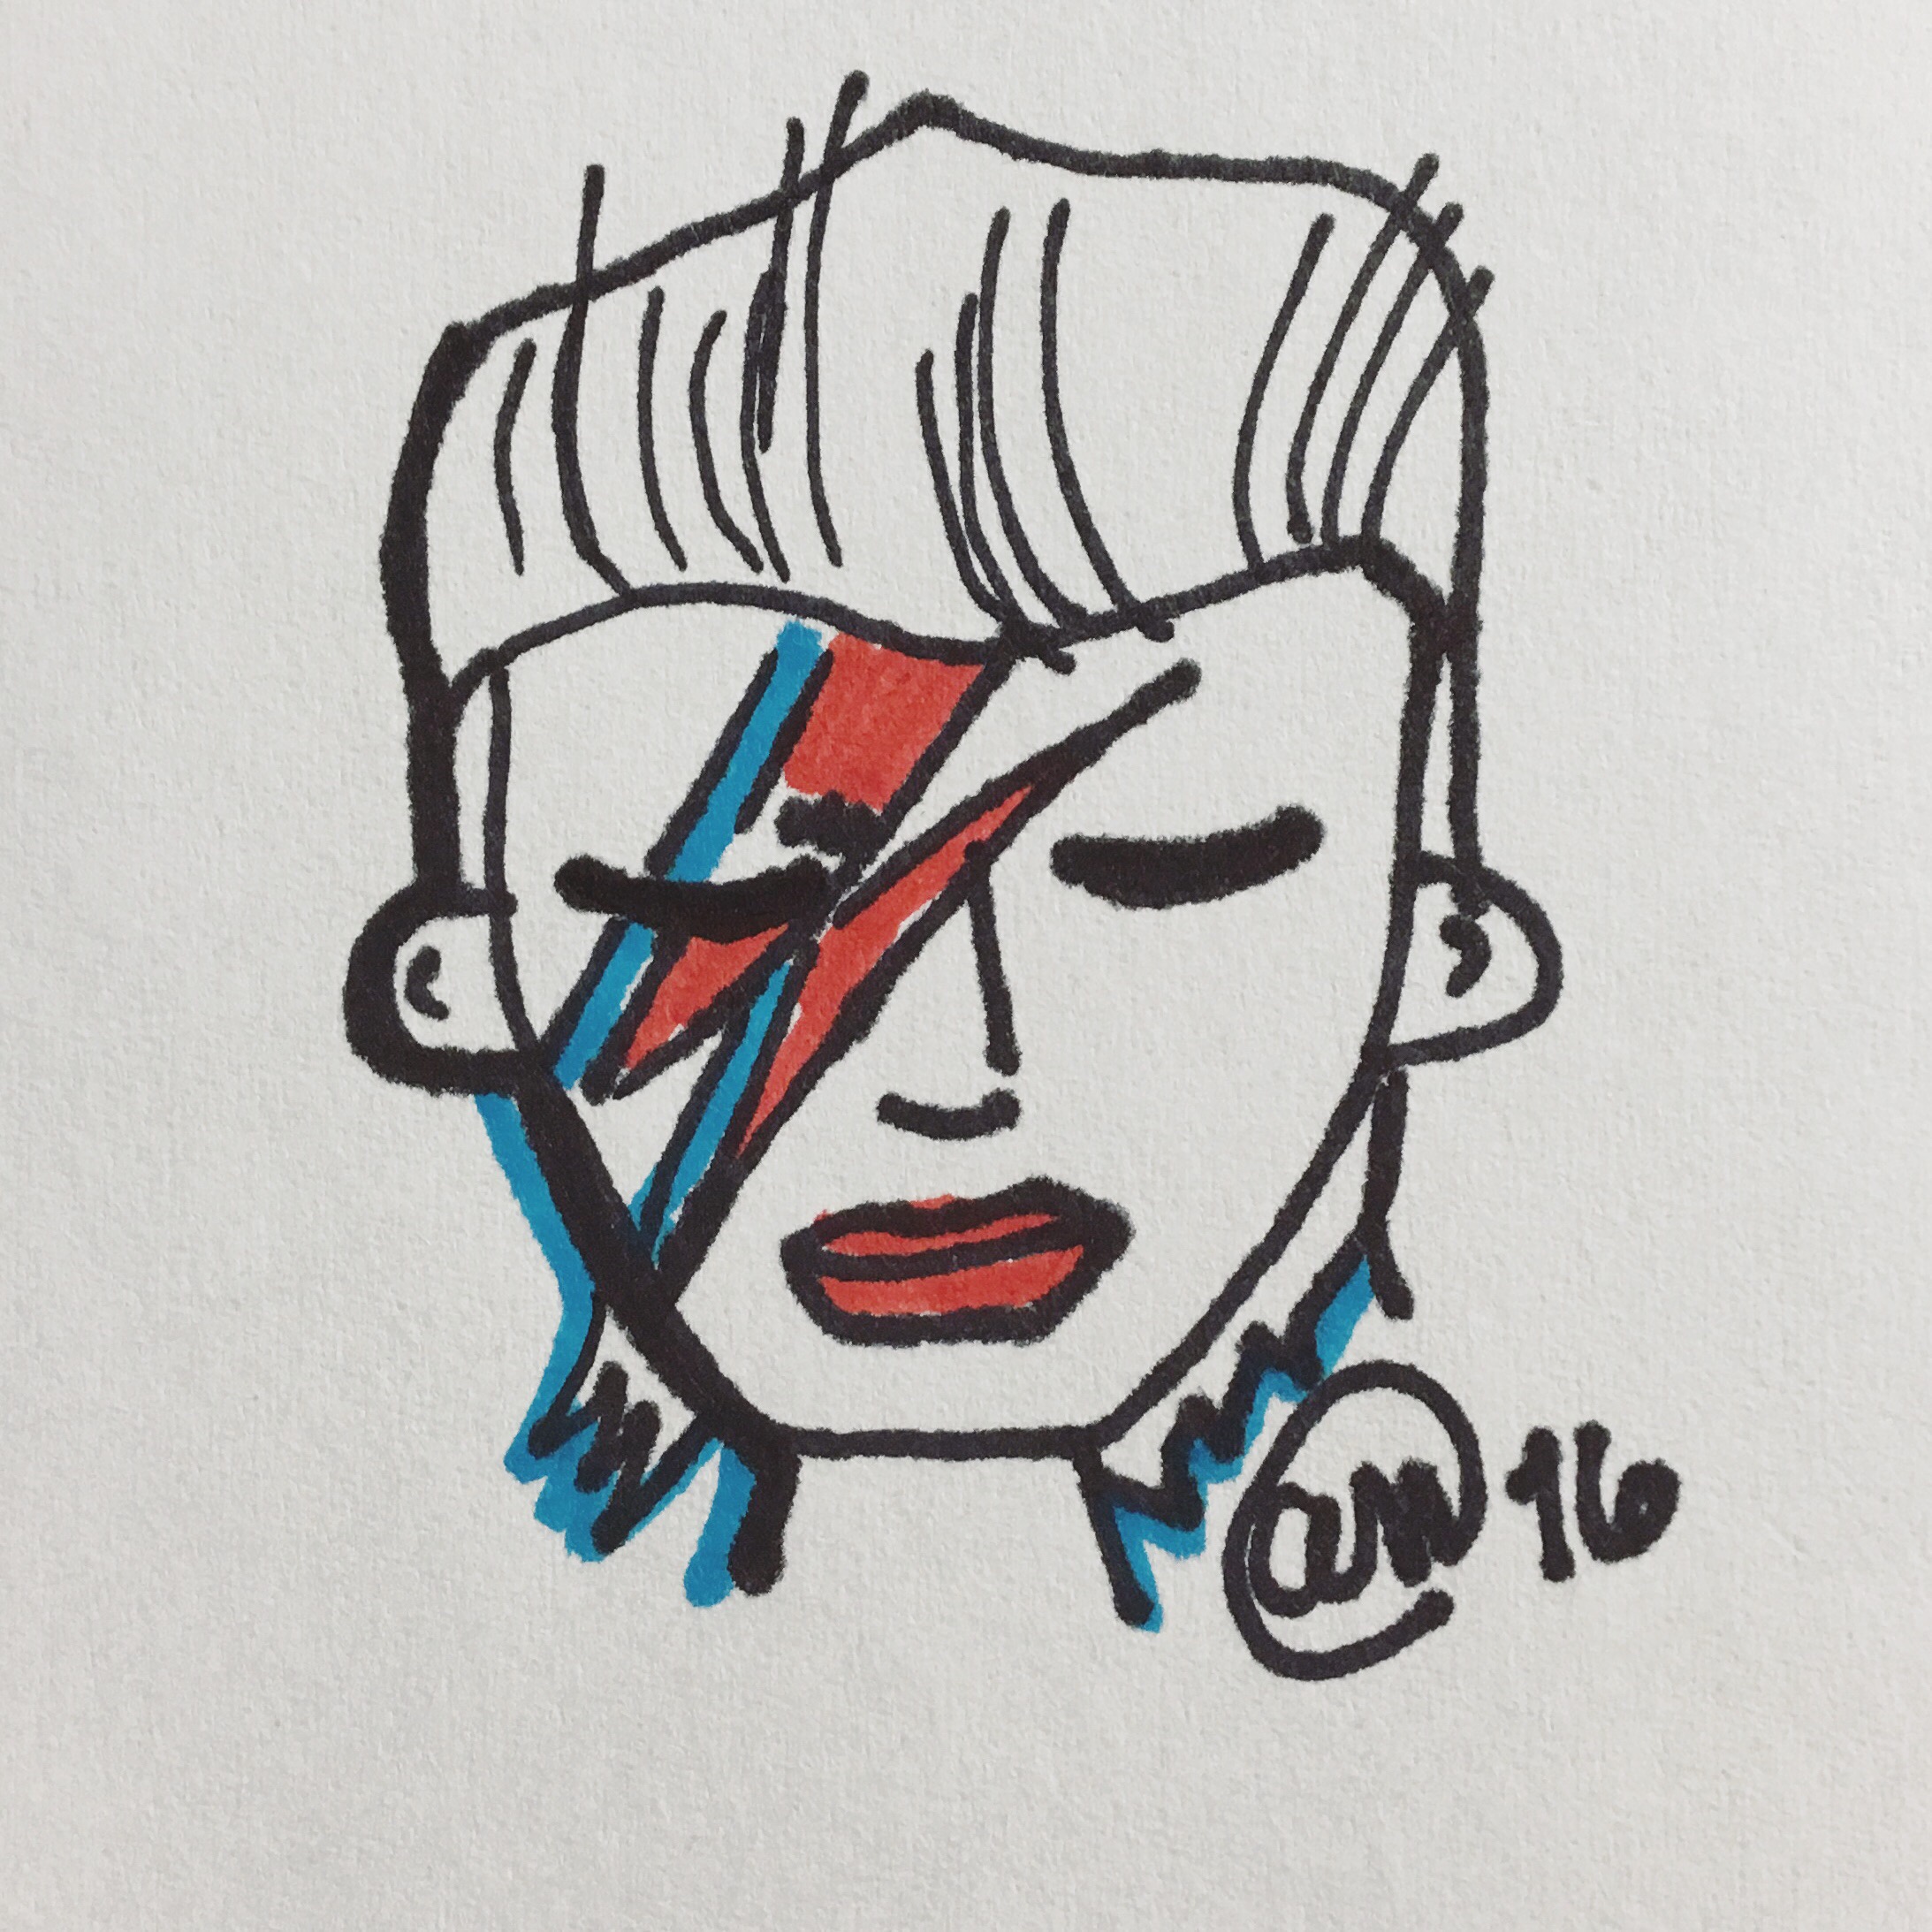 David Bowie sketch